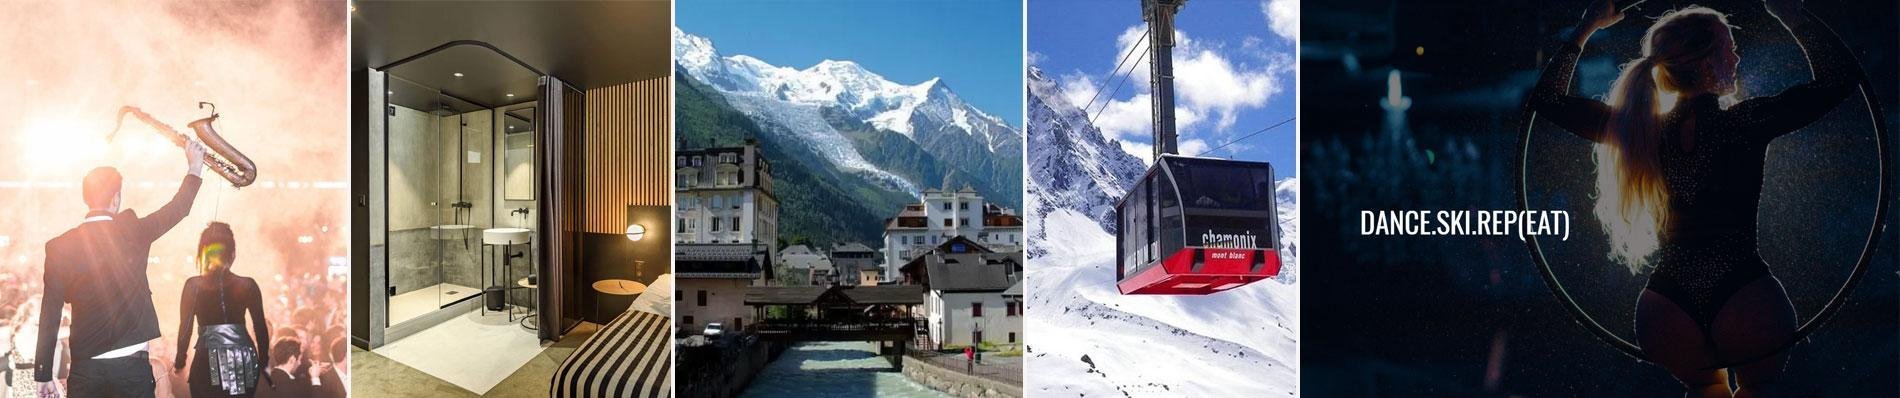 LA-FOLIE-DOUCE Chamonix Mont Blanc ski wintersport